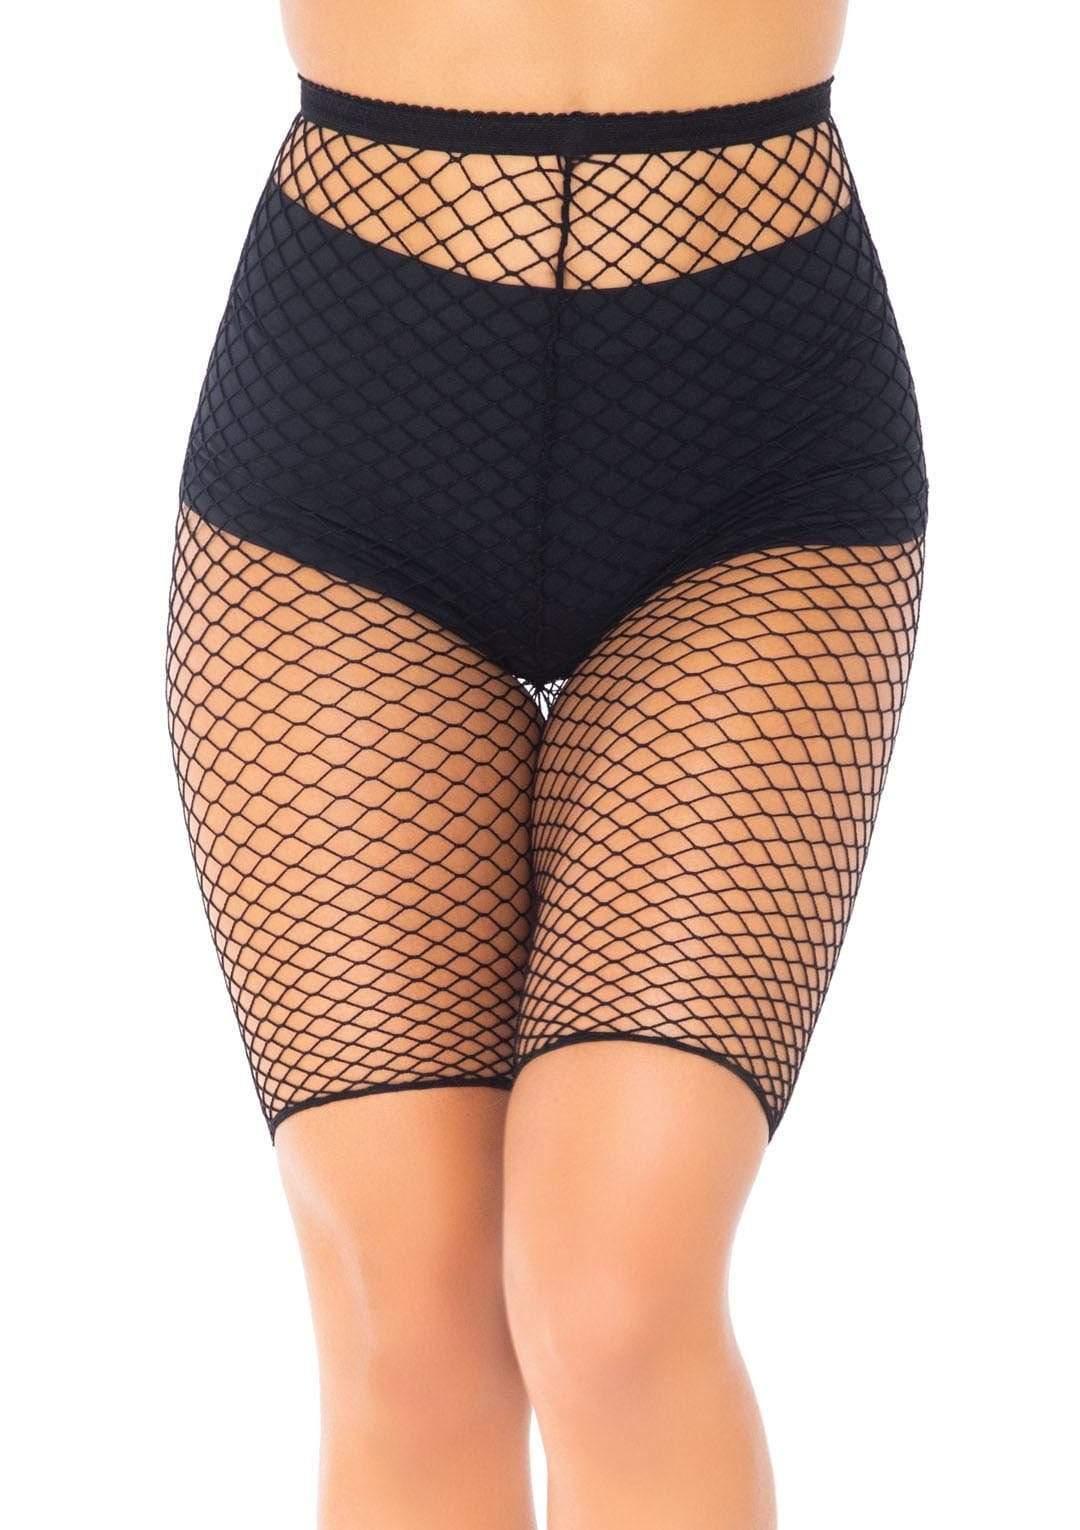 Industrial Fishnet Biker Shorts - One Size - Black - My Sex Toy Hub